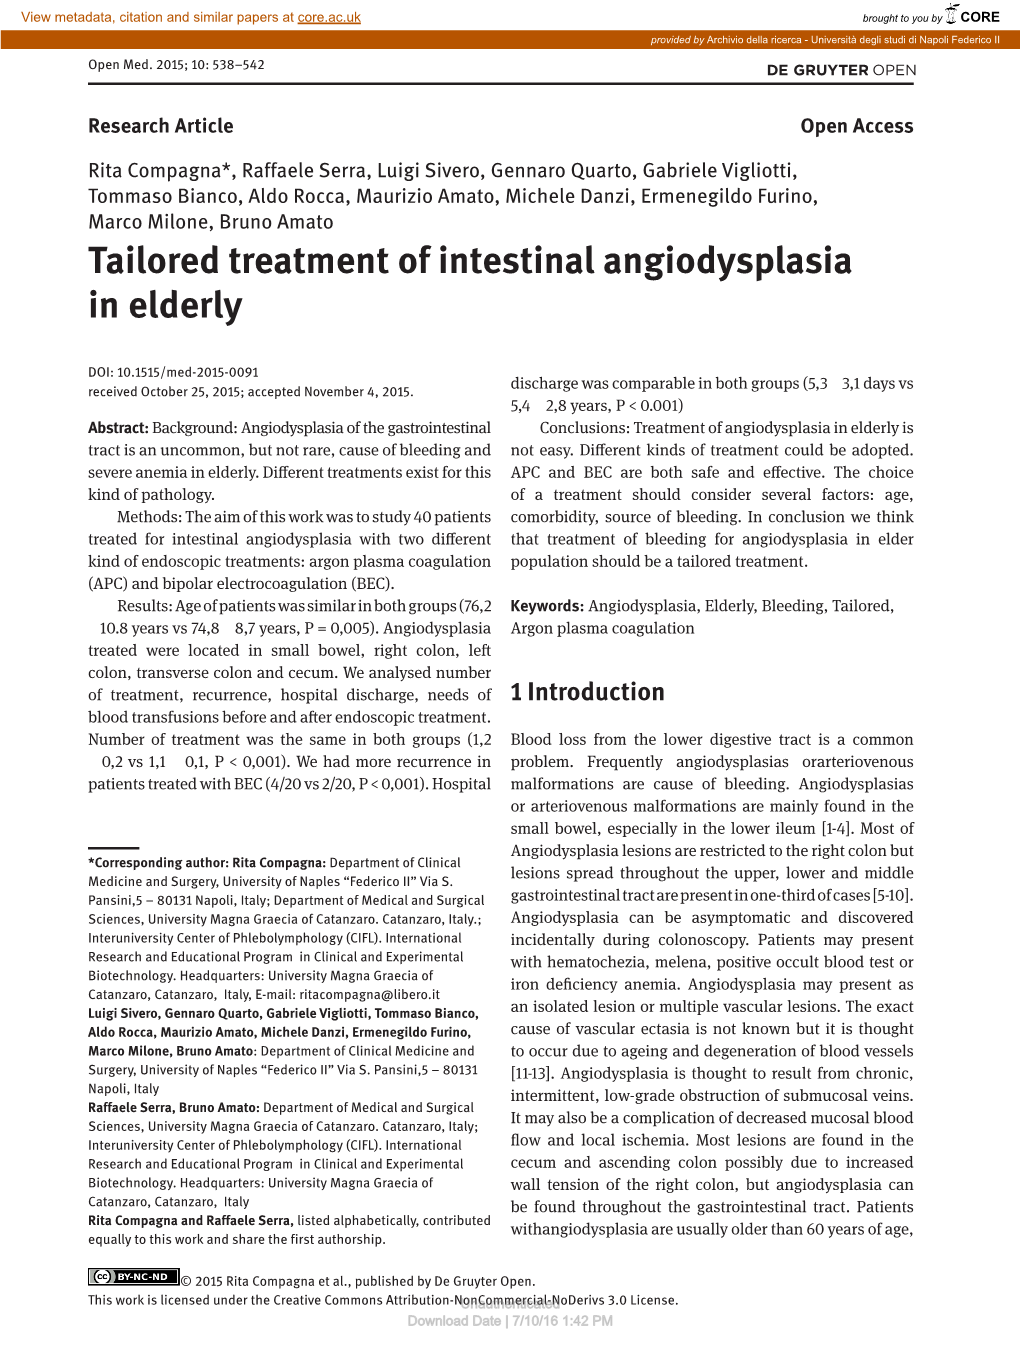 Tailored Treatment of Intestinal Angiodysplasia in Elderly